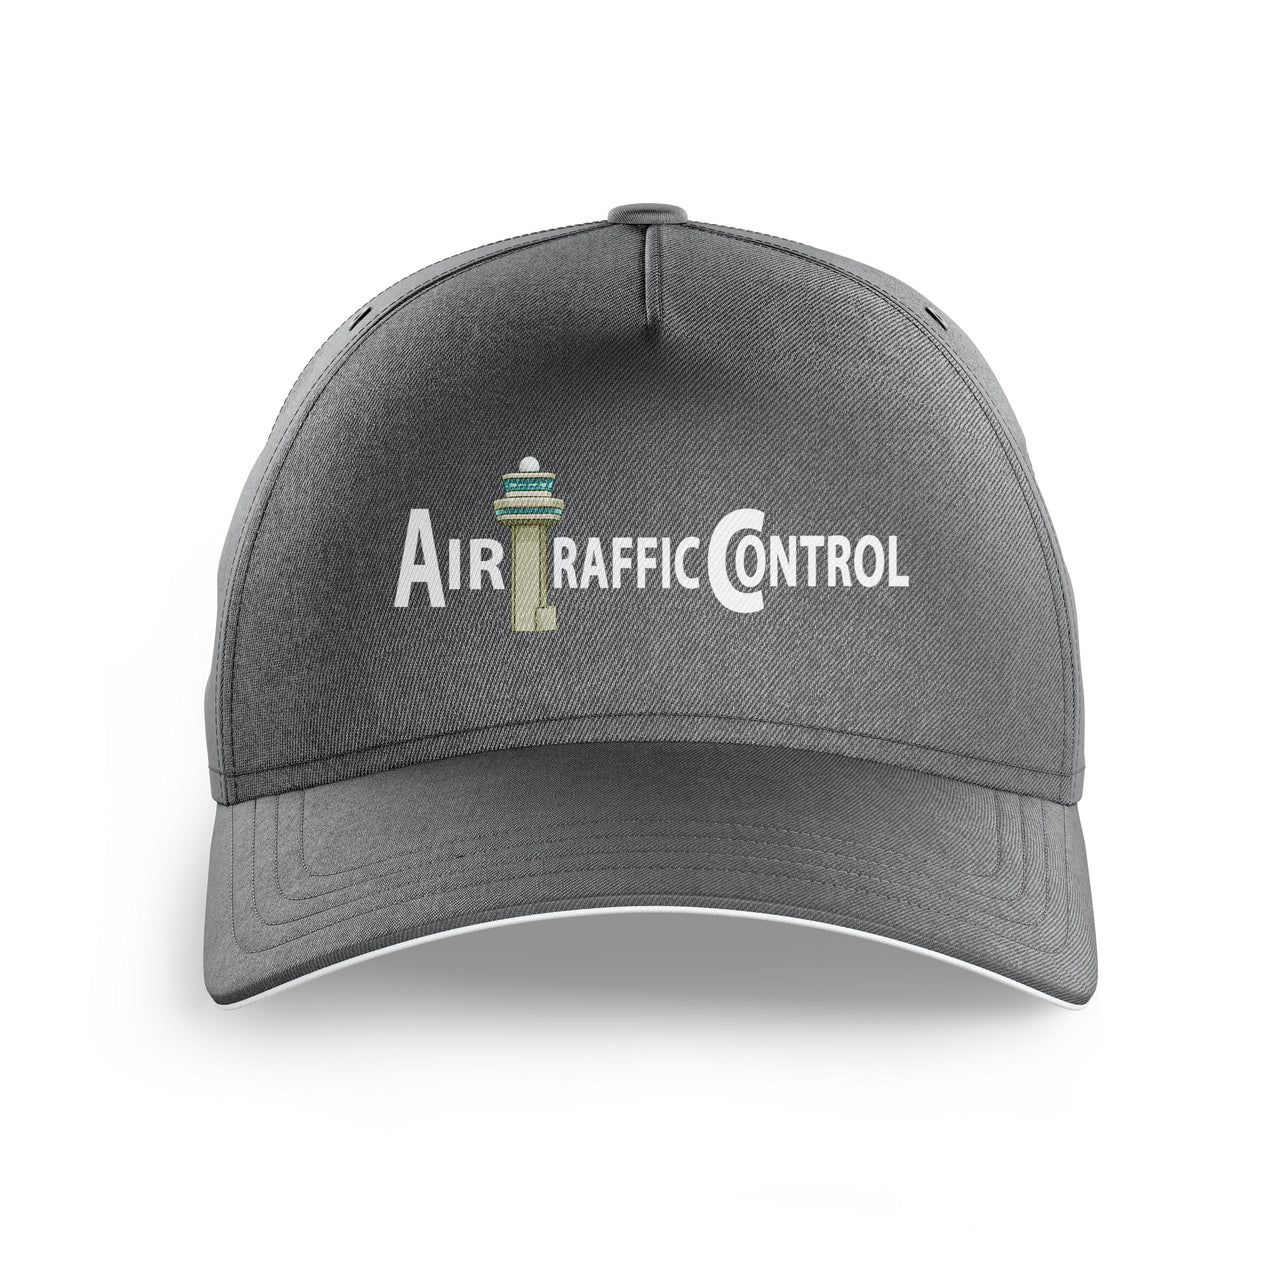 Air Traffic Control Printed Hats